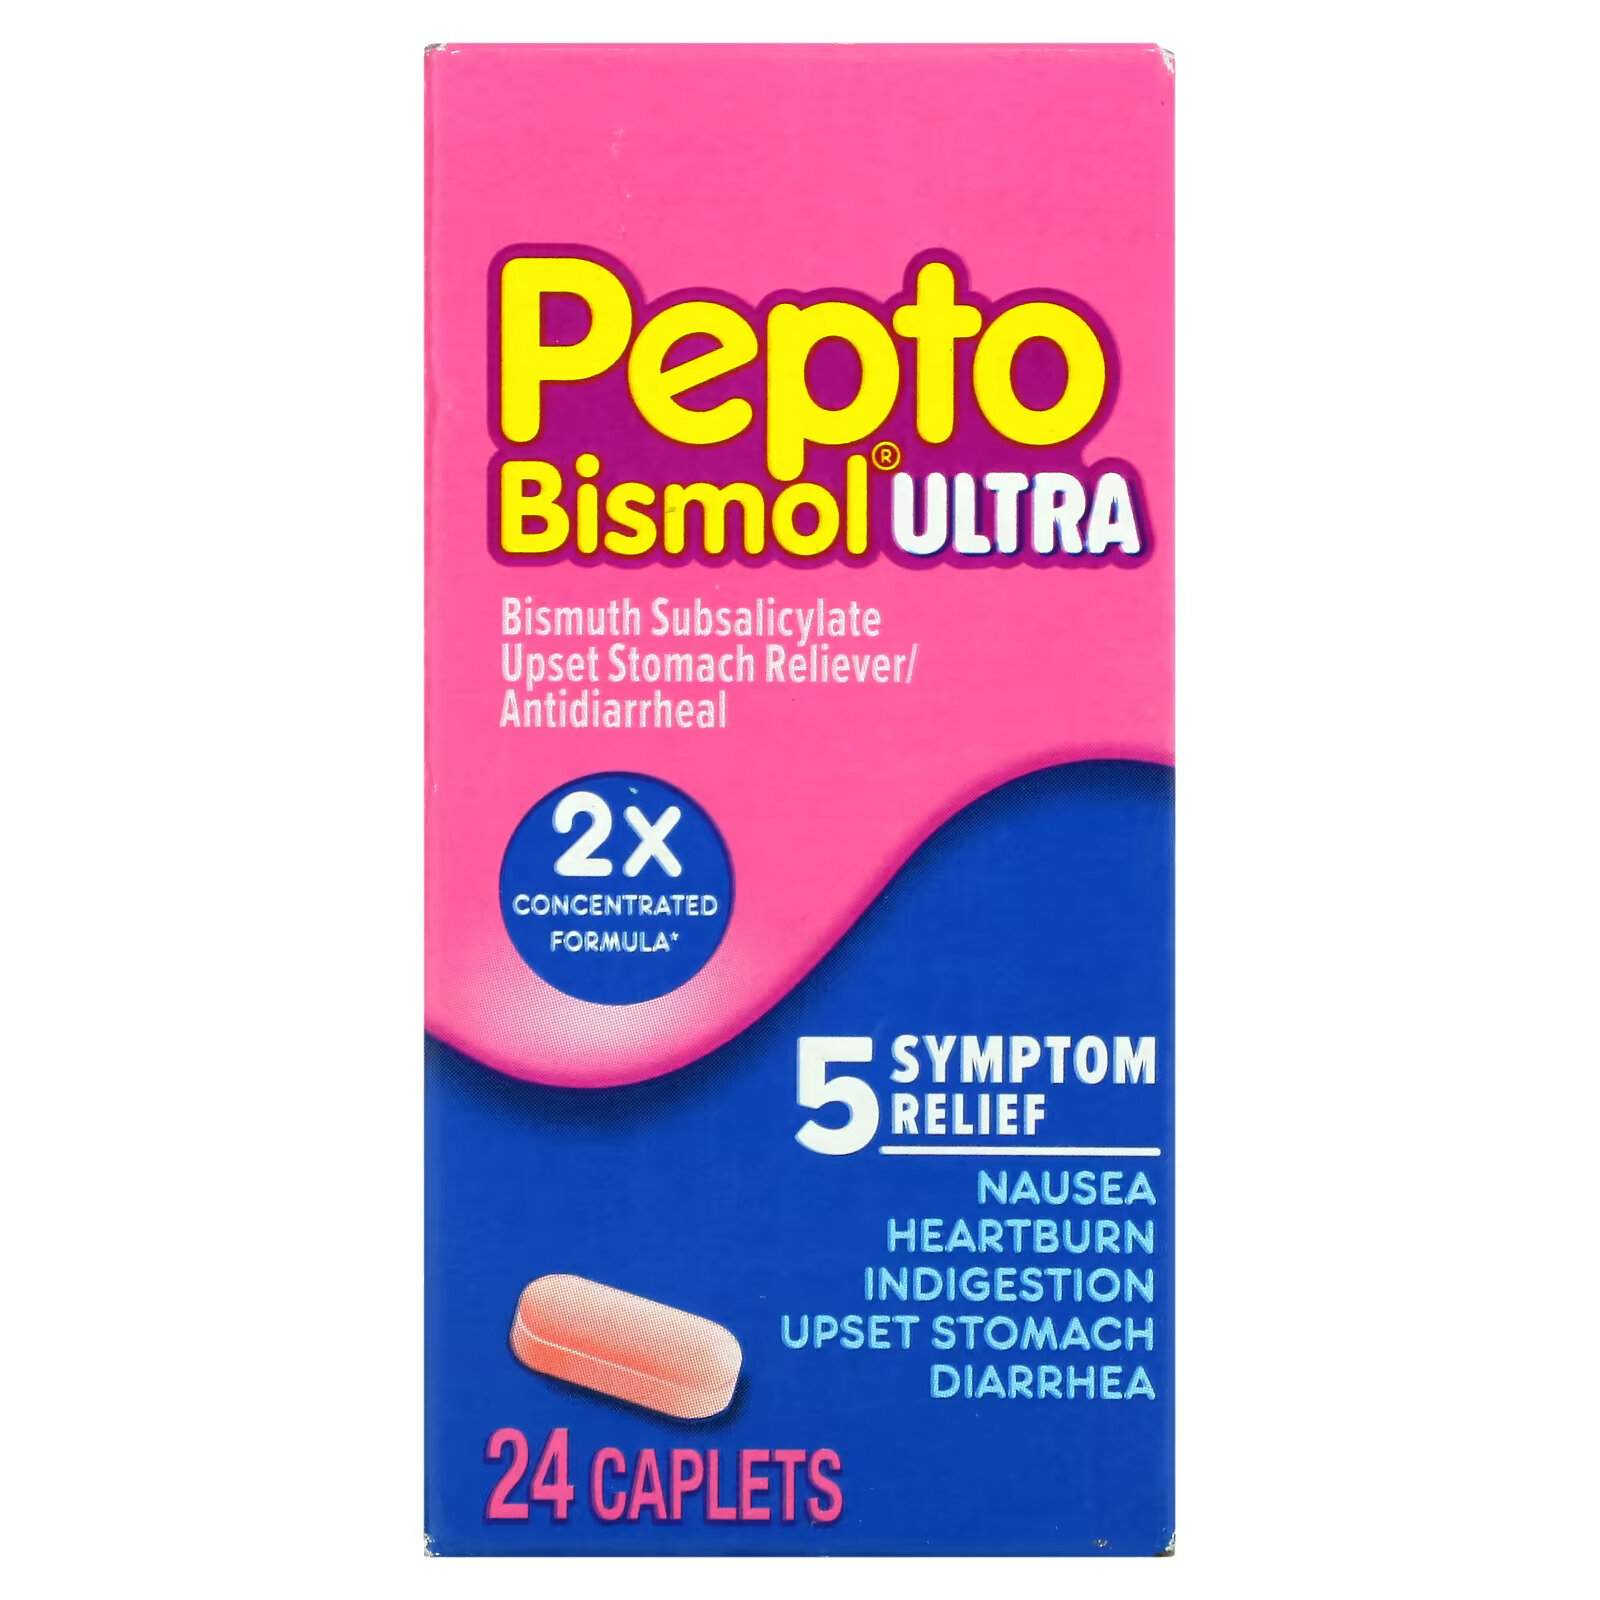 Pepto Bismol, Пепто бисмол ультра, 24 капсулы 36993